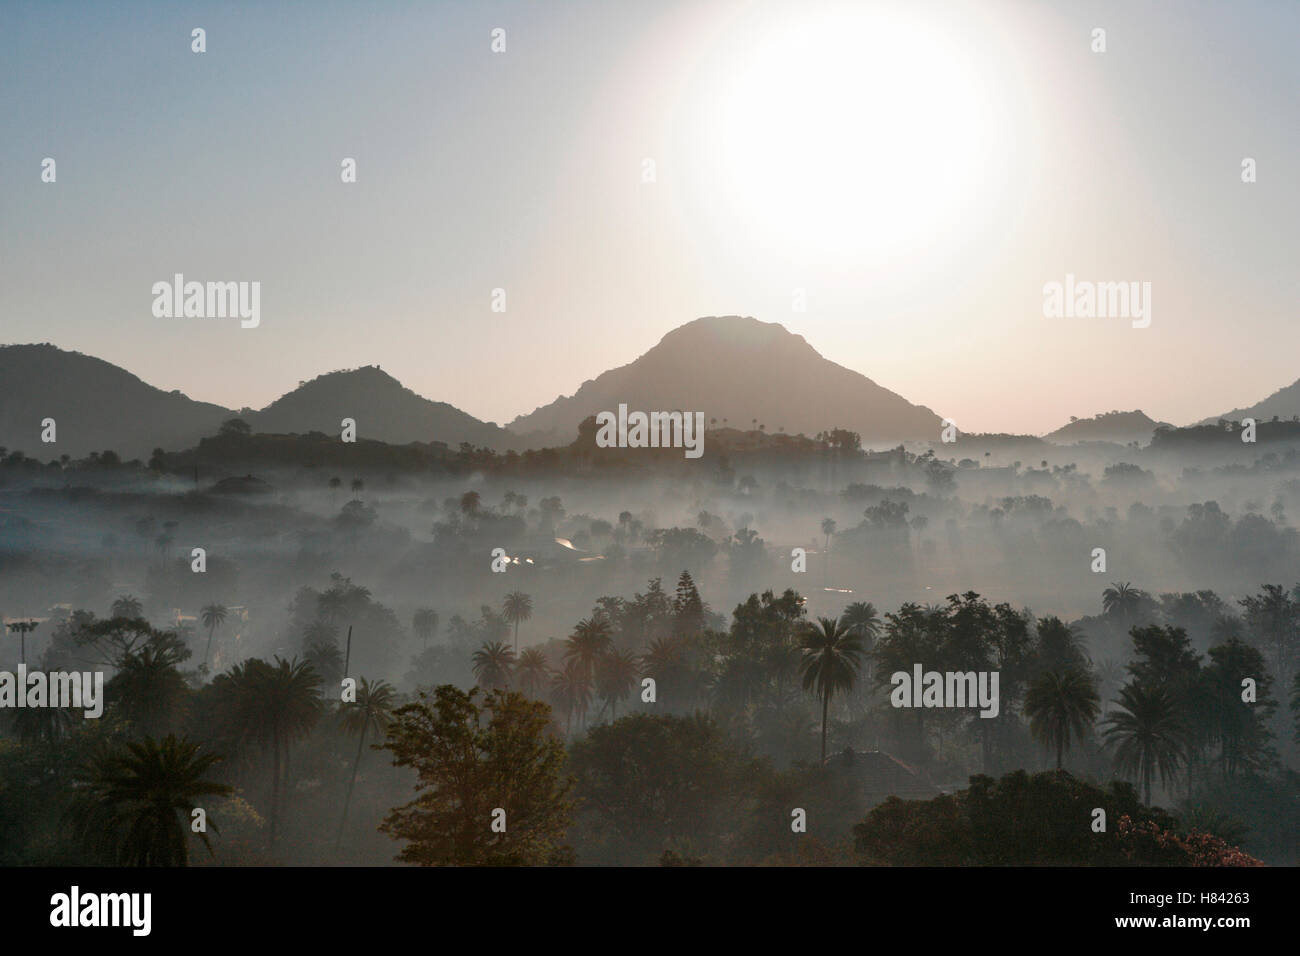 Paesaggio dal monte Abu. Rajasthan, India. Foto Stock